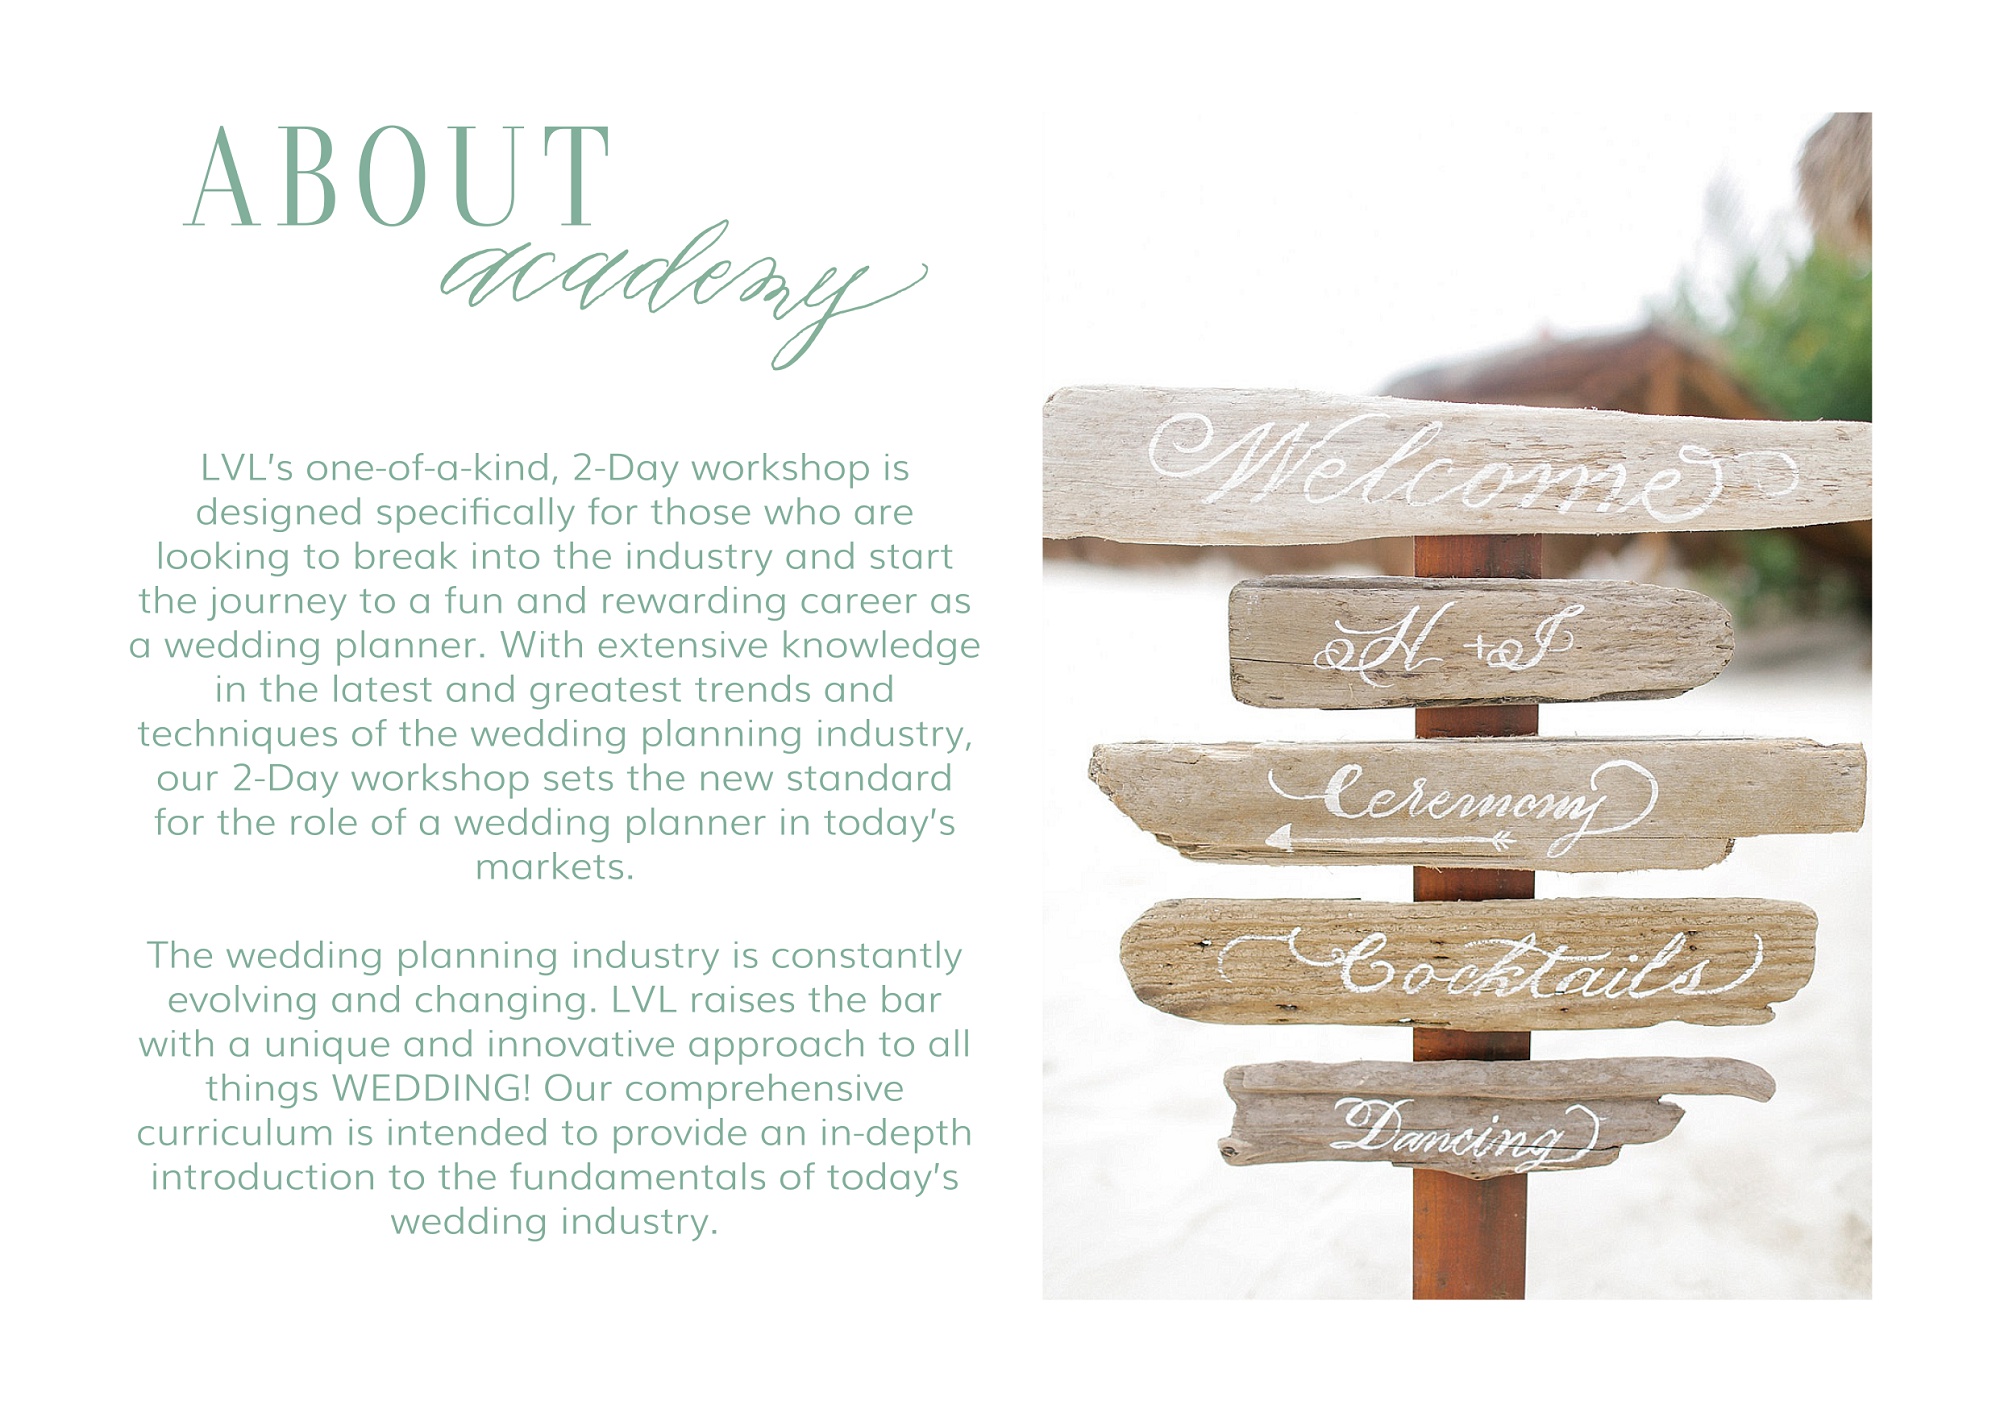 Costa Mesa 2015 wedding workshop